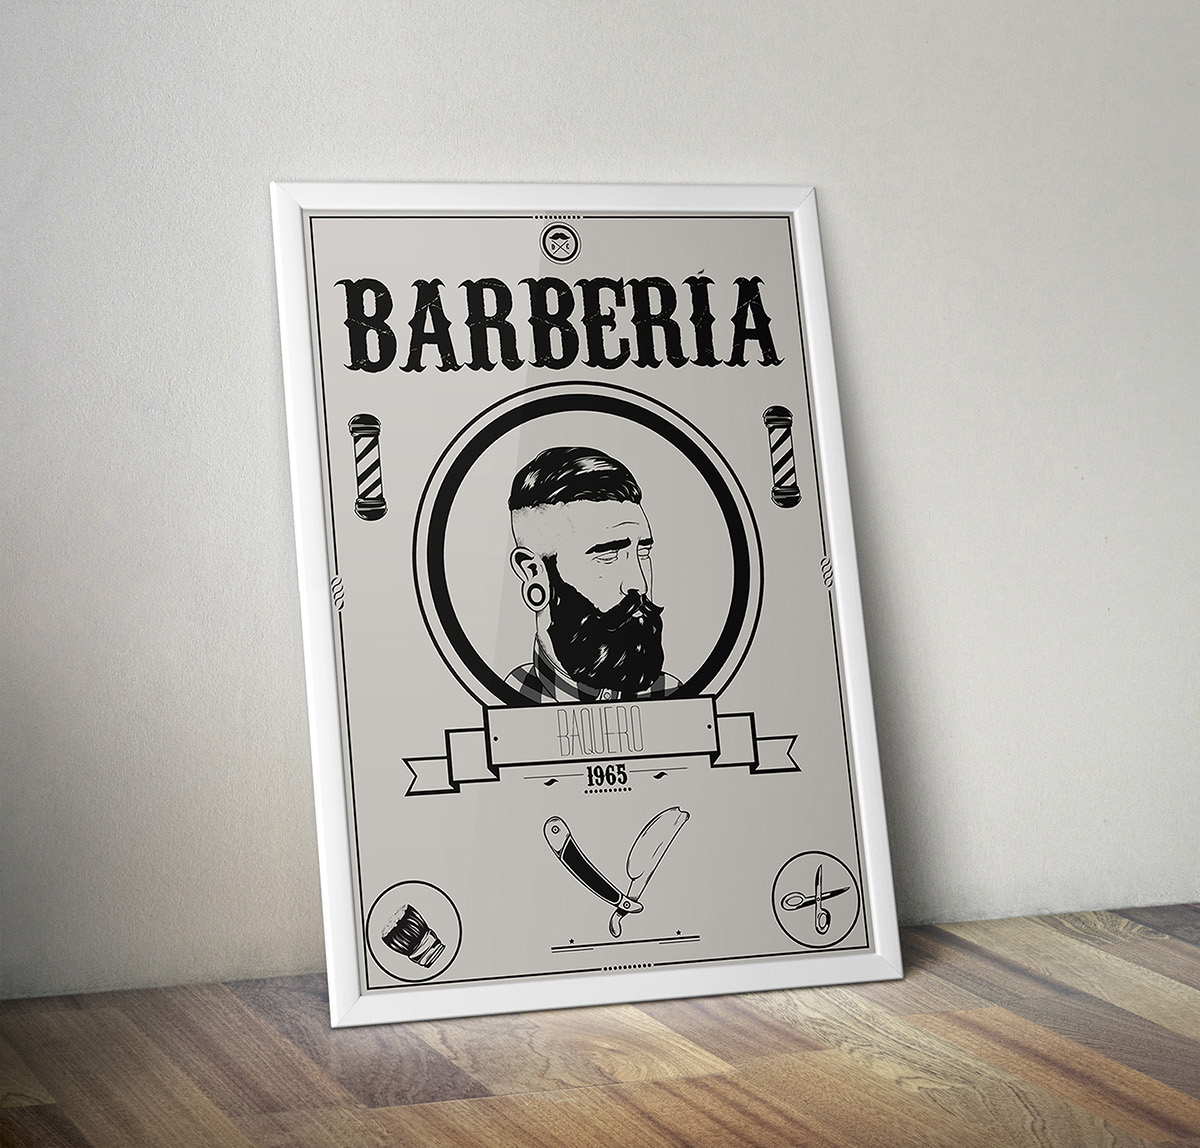 piru zeraus poster Mockup vintage barberia barber cartel